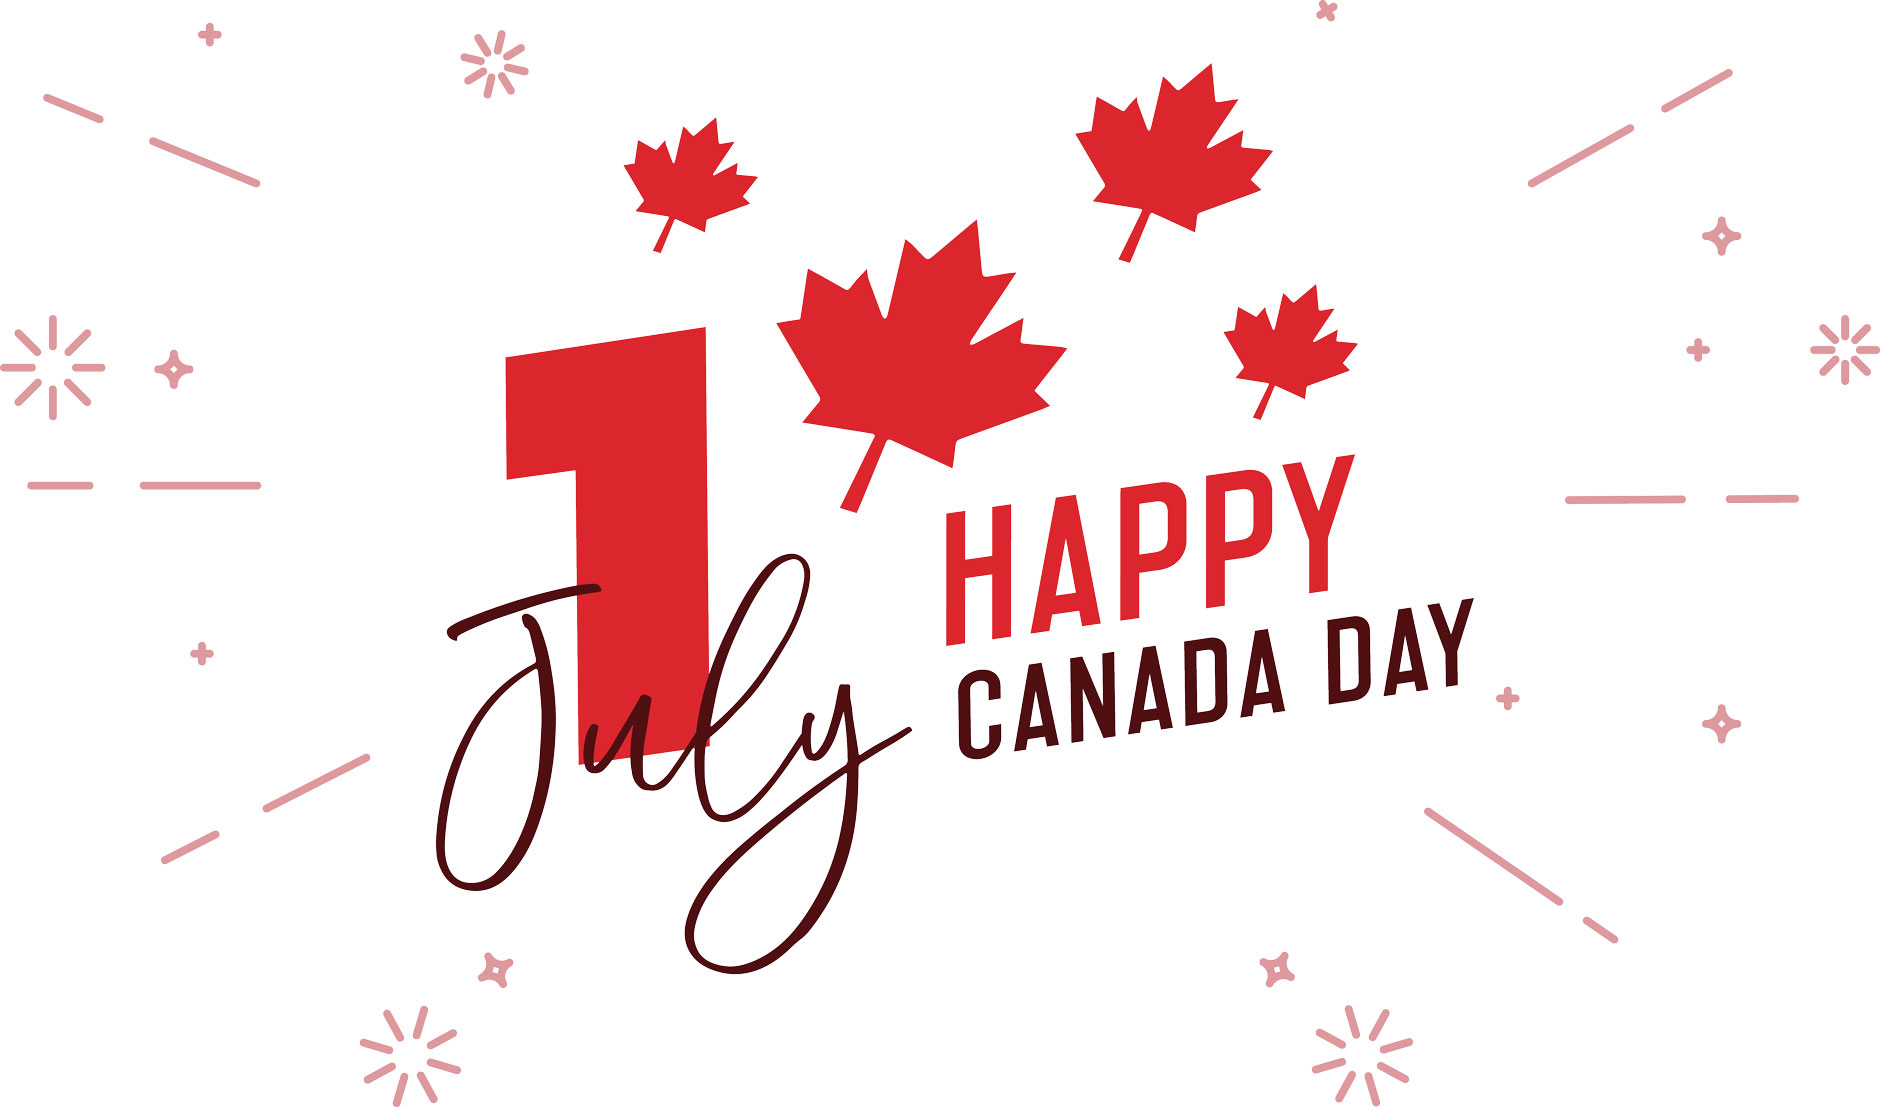 Happy Canada Day 2020!